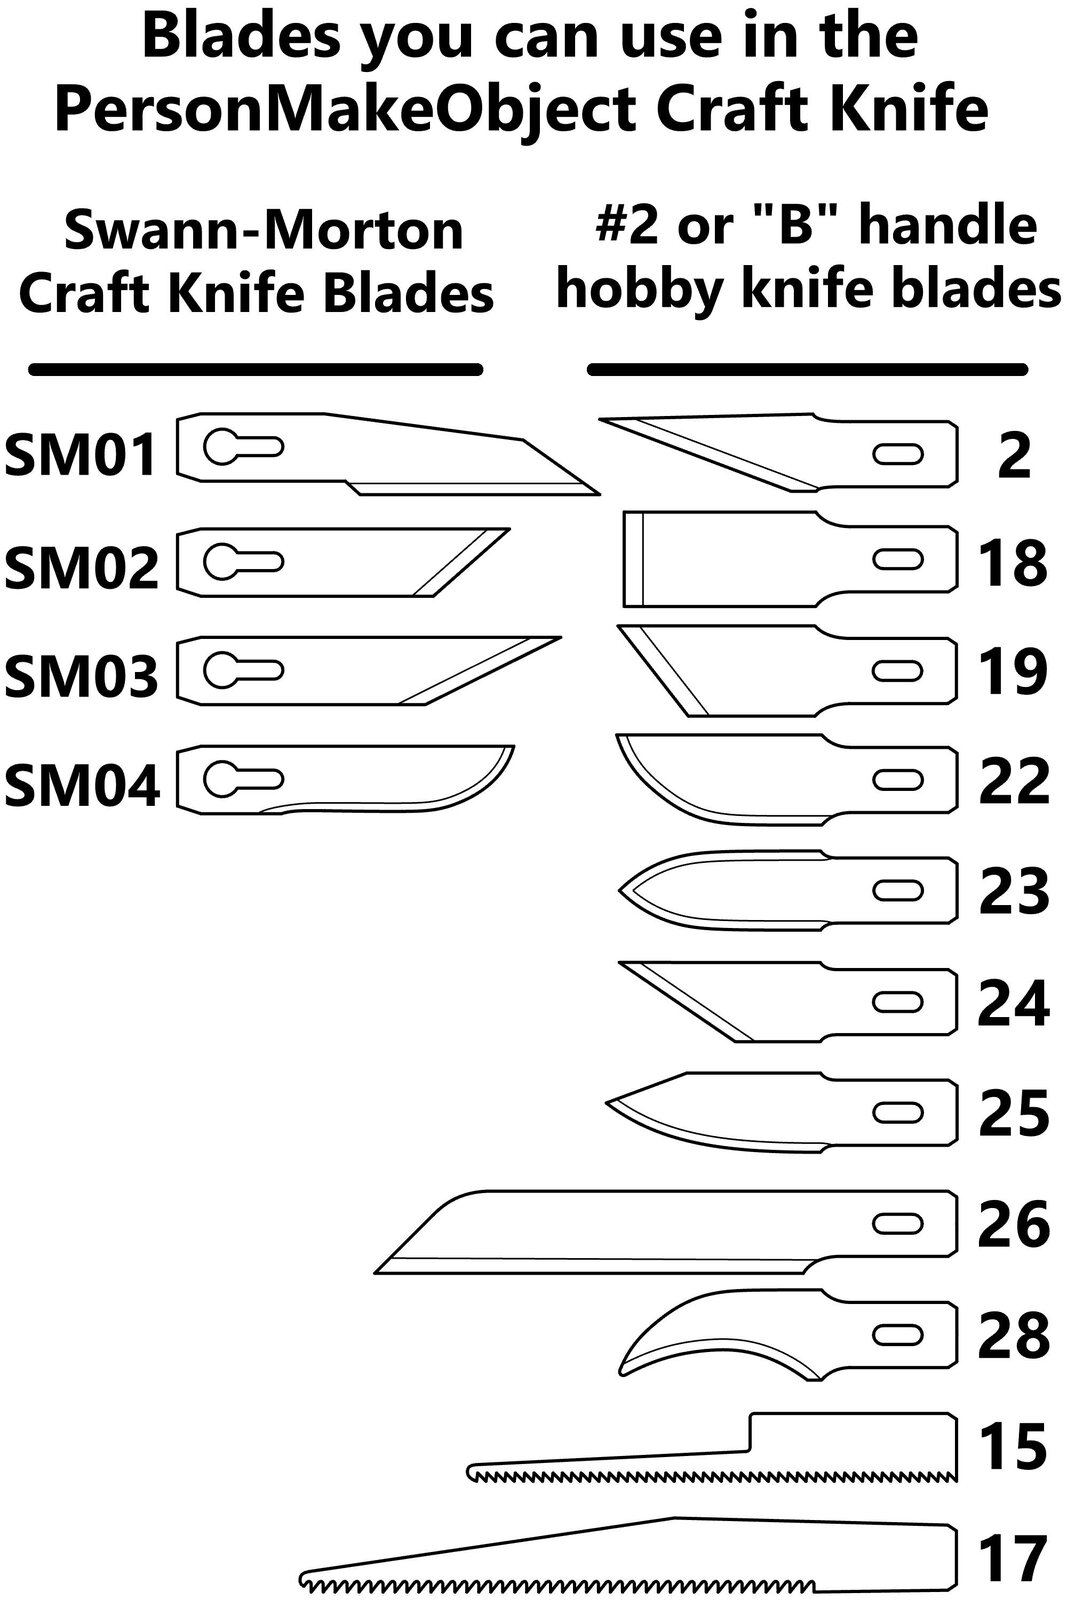 blades_line.jpg